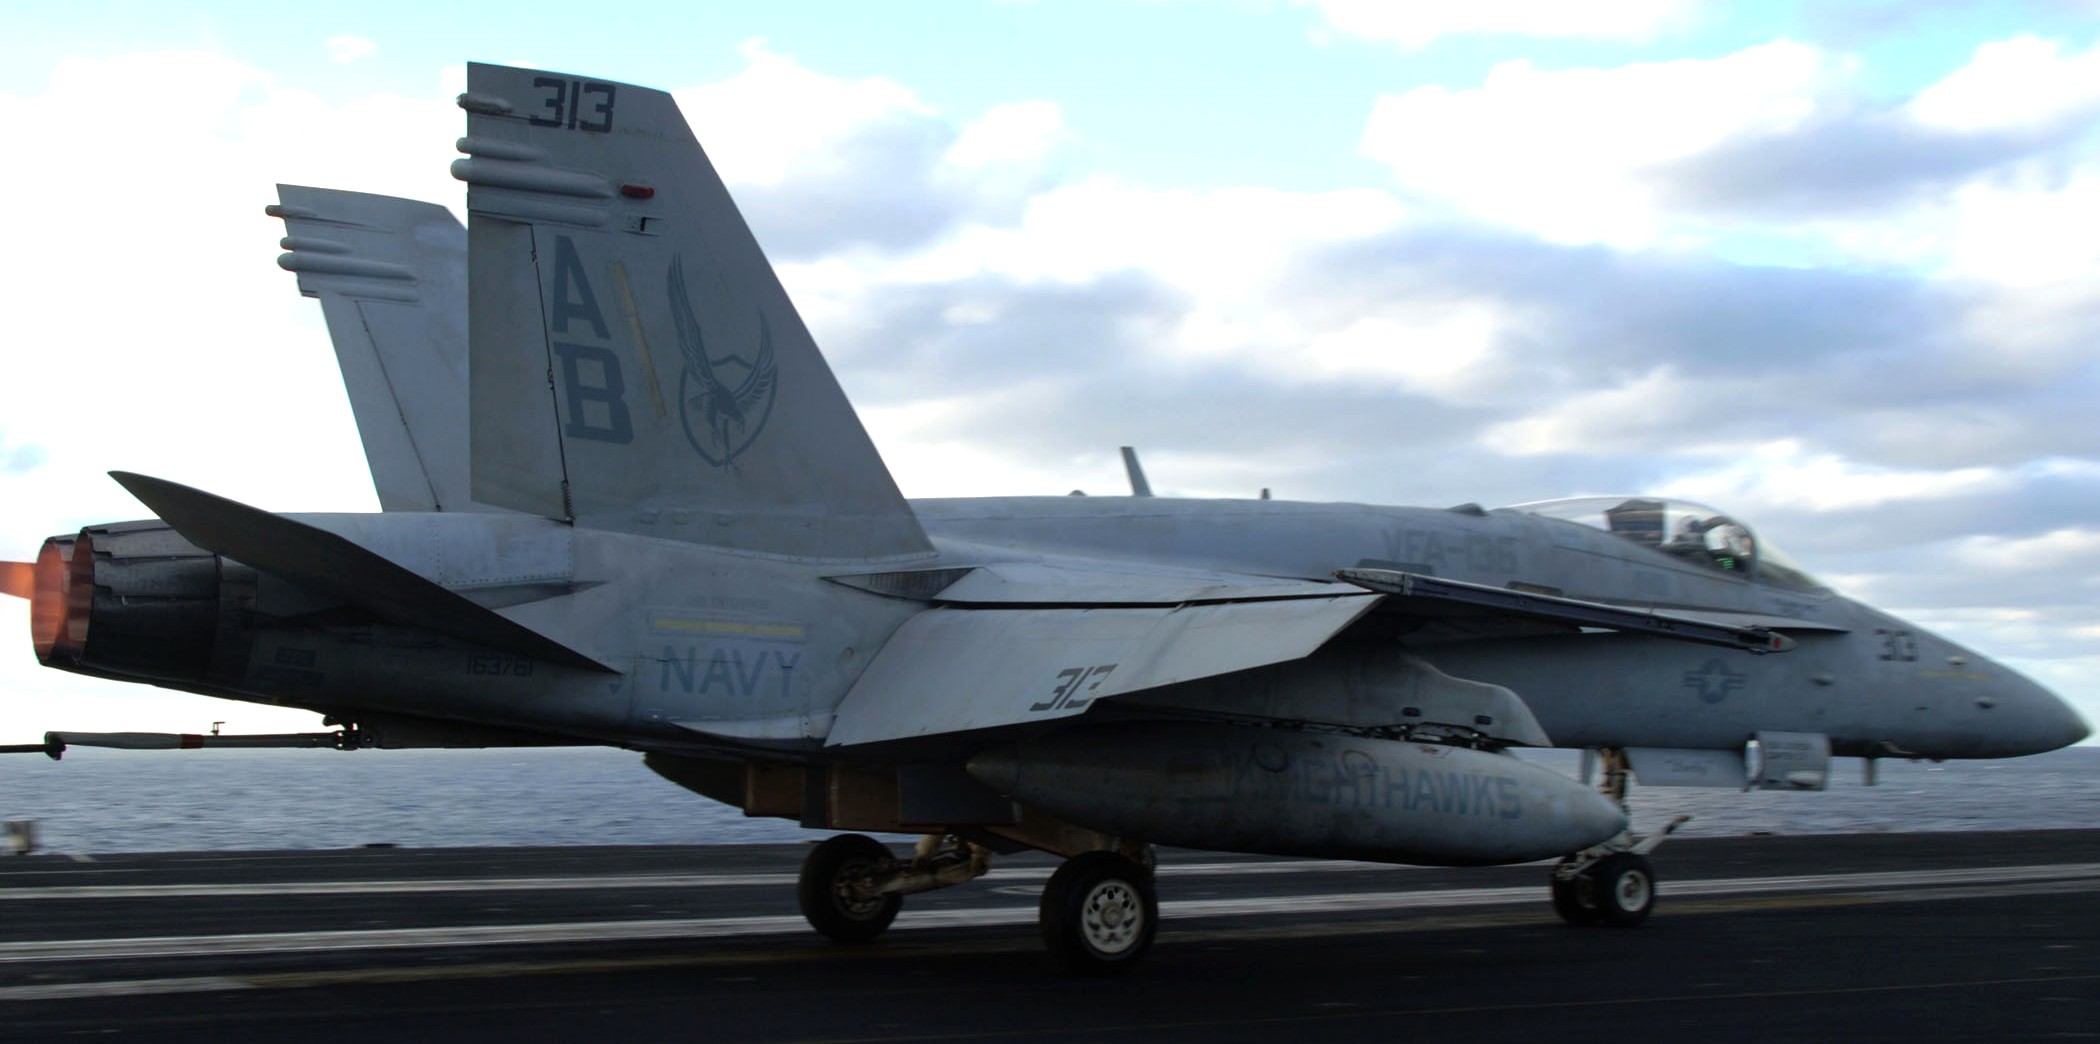 vfa-136 knighthawks strike fighter squadron f/a-18c hornet 2007 27 cvw-1 uss enterprise cvn-65